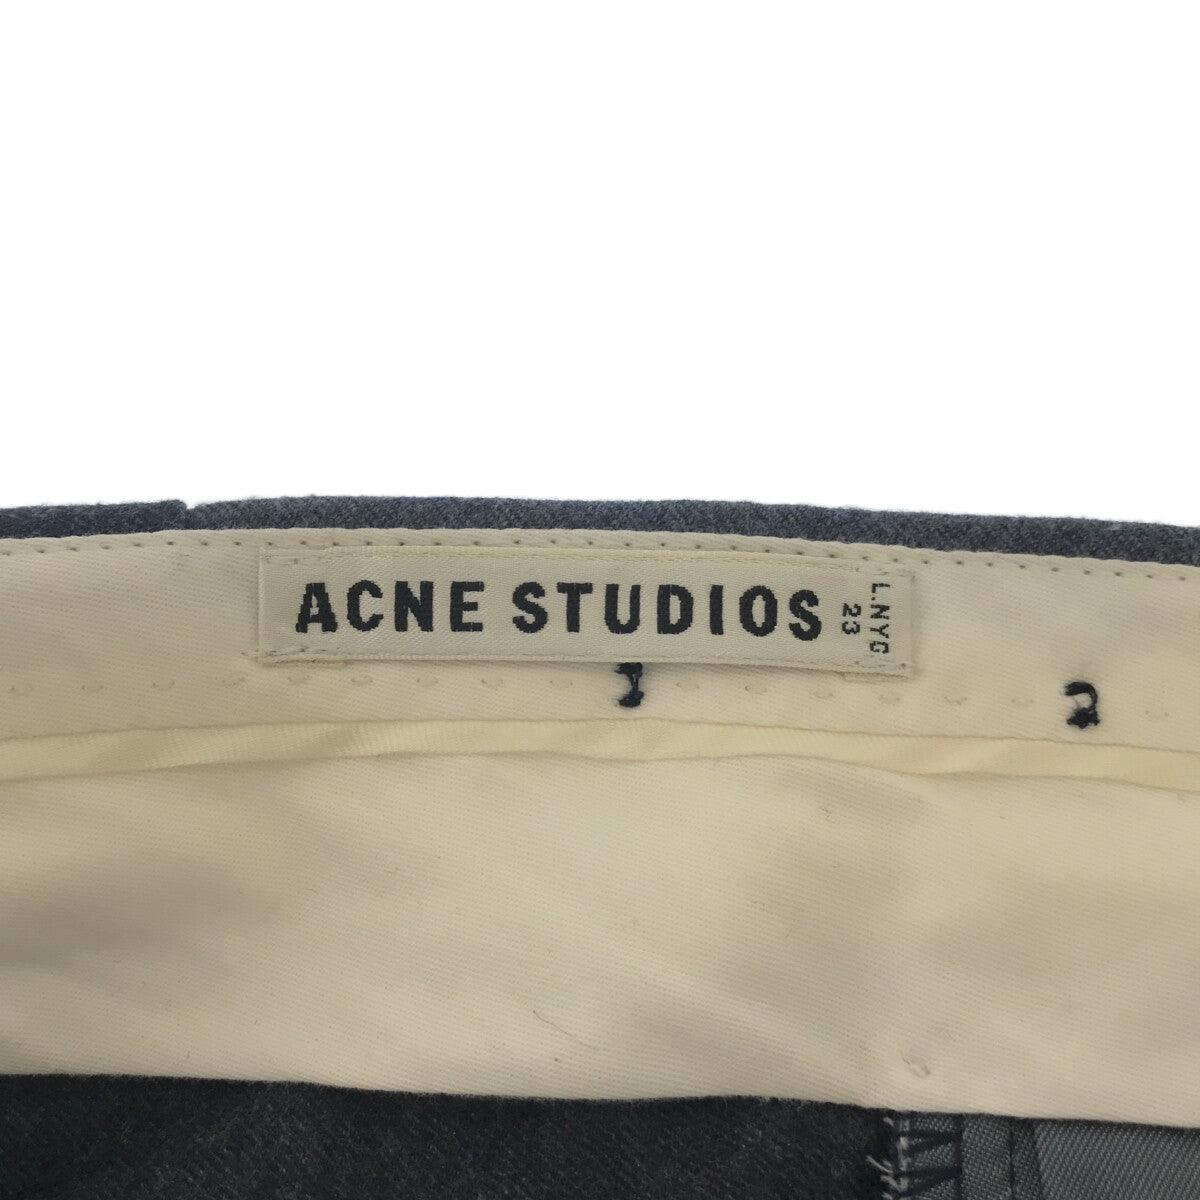 Acne Studios / アクネストゥディオズ | ウール サイドジップ テーパードパンツ | 36 |